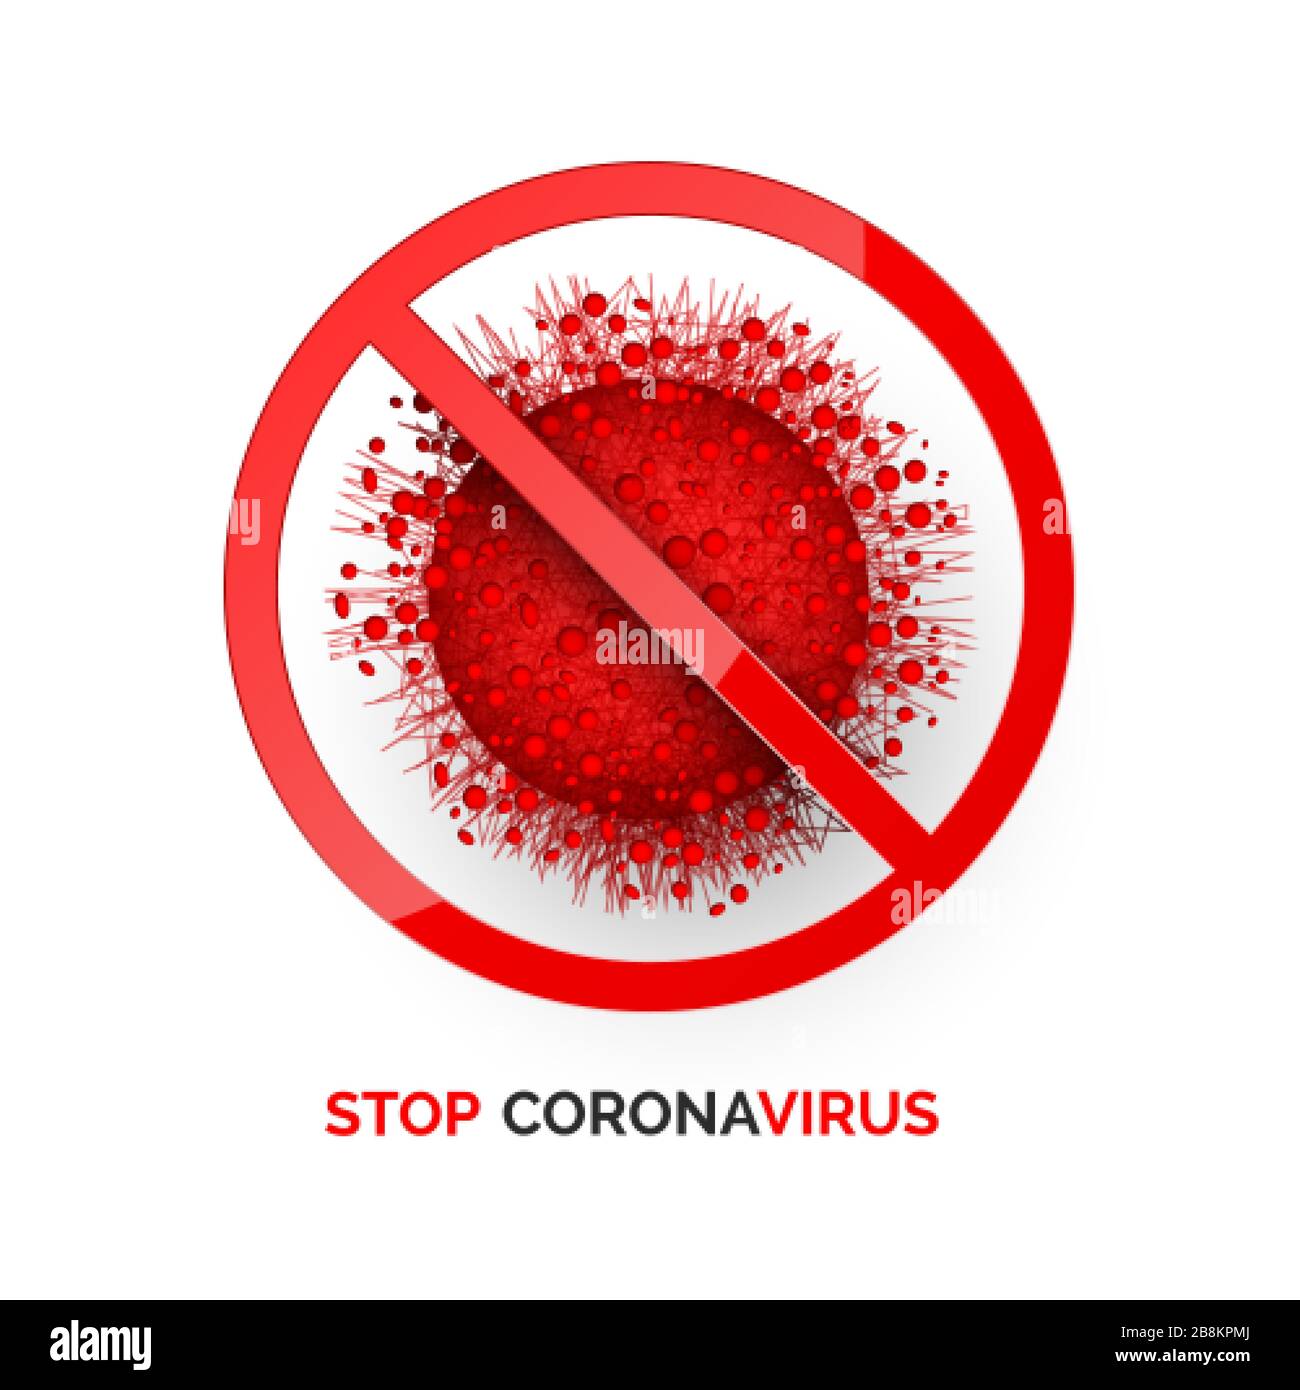 Stop Corona Virus Infection. Medicine warning background. Dangerous disease symptoms. Vector illustration Stock Vector